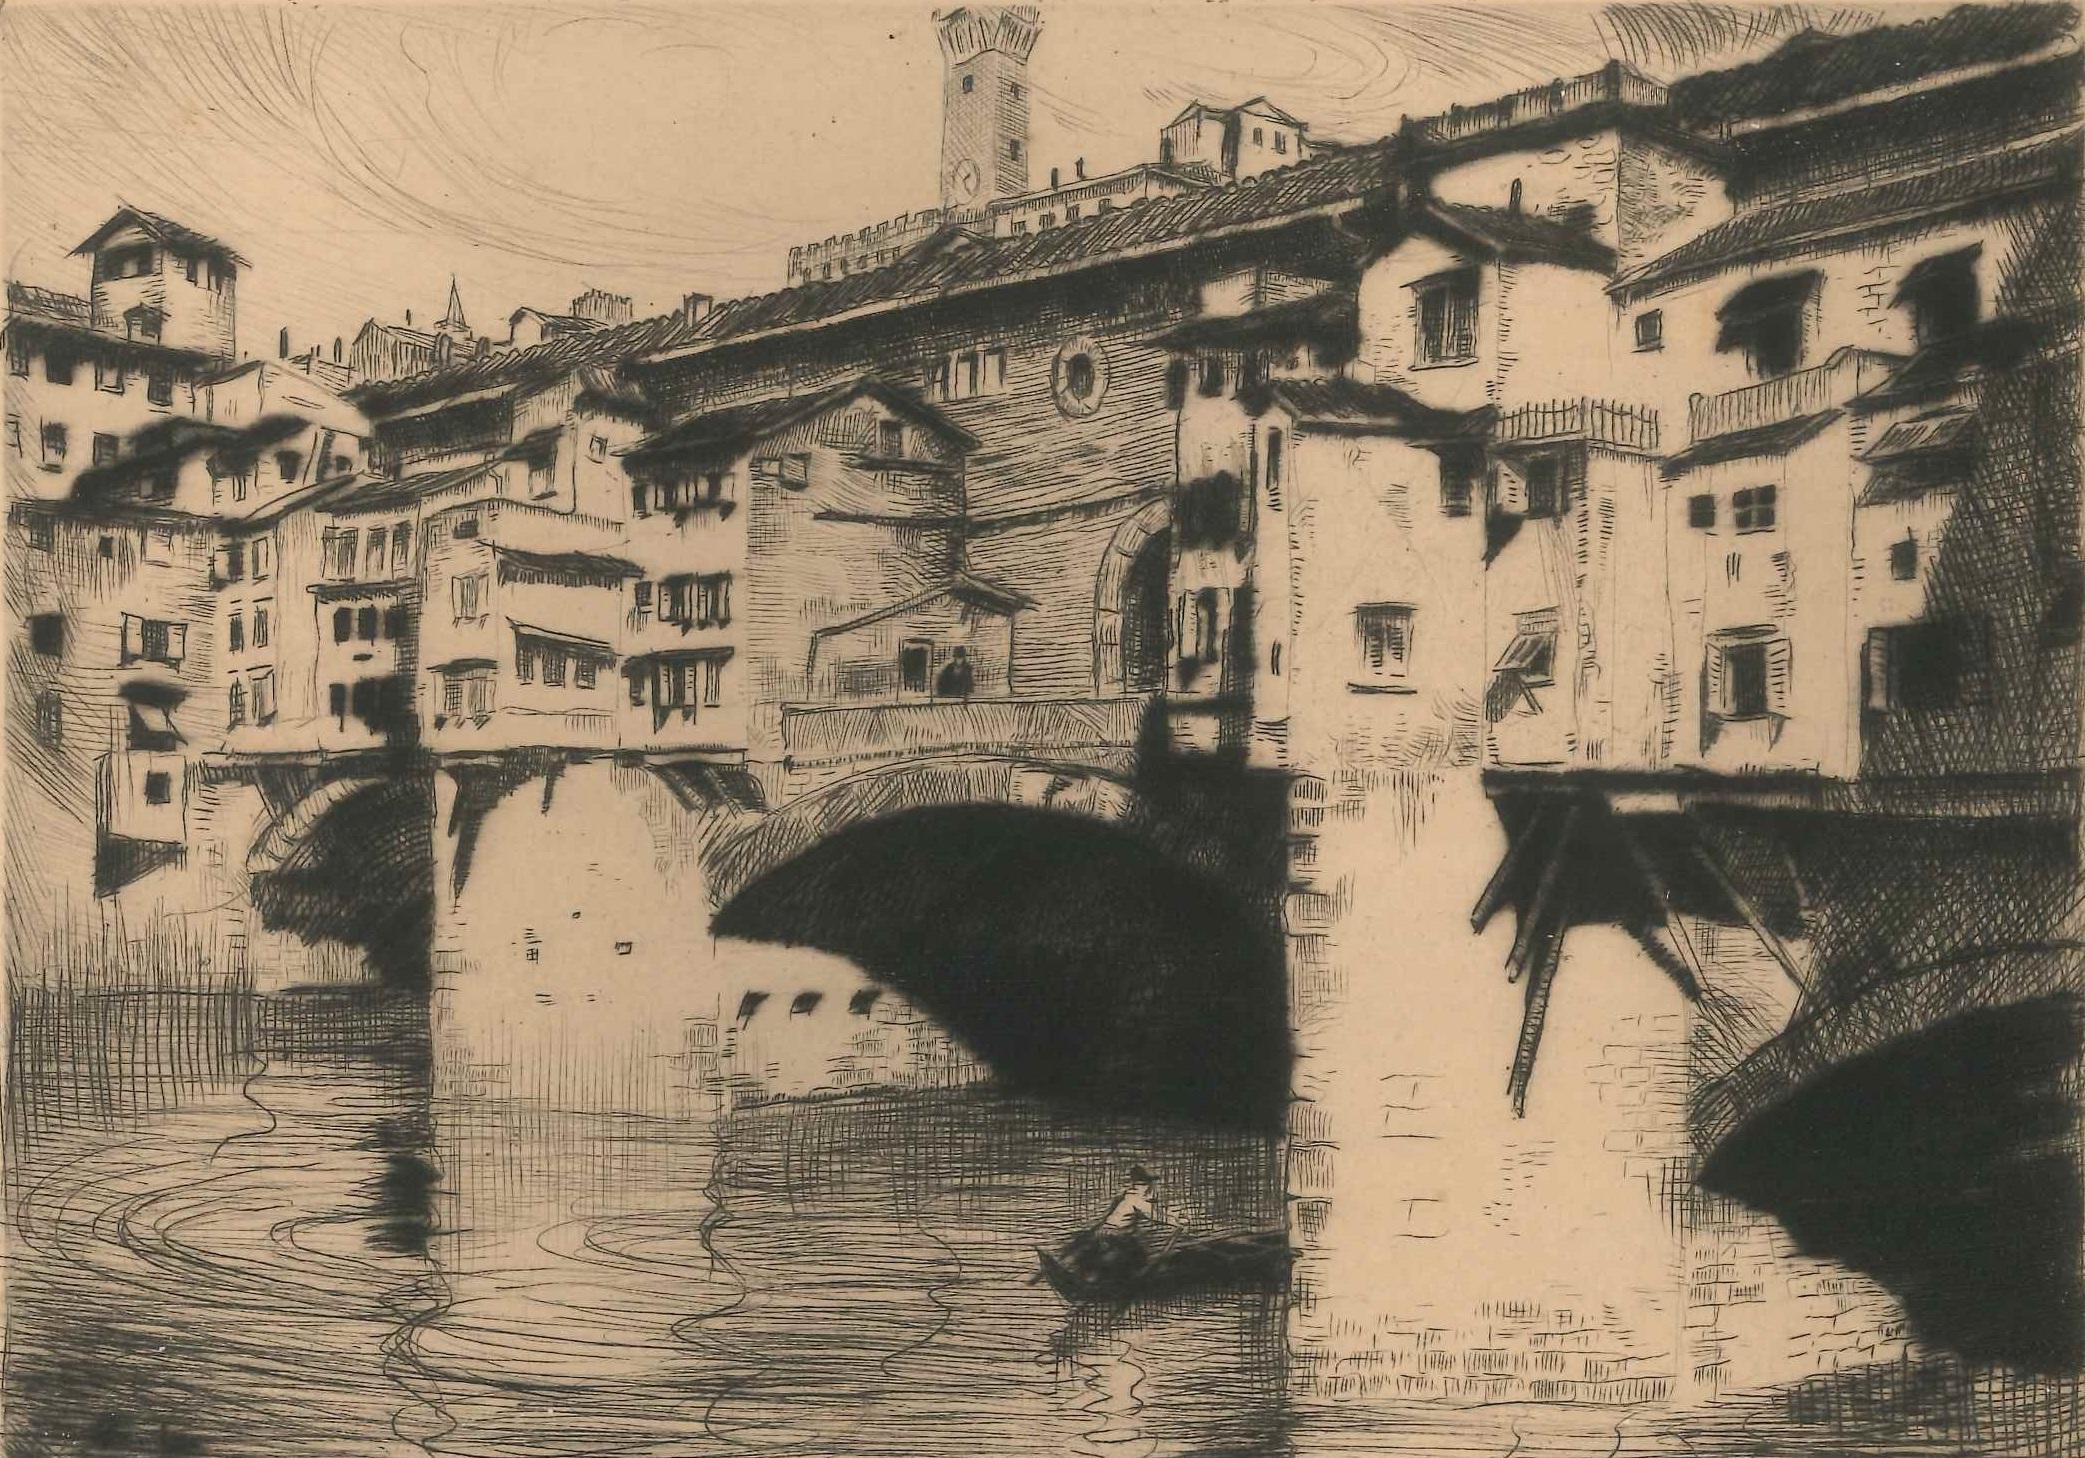 Edizioni Ponte Vecchio Stampa Antica Veduta Fiesole 728-31 25x34,5cm Serie Limitata 